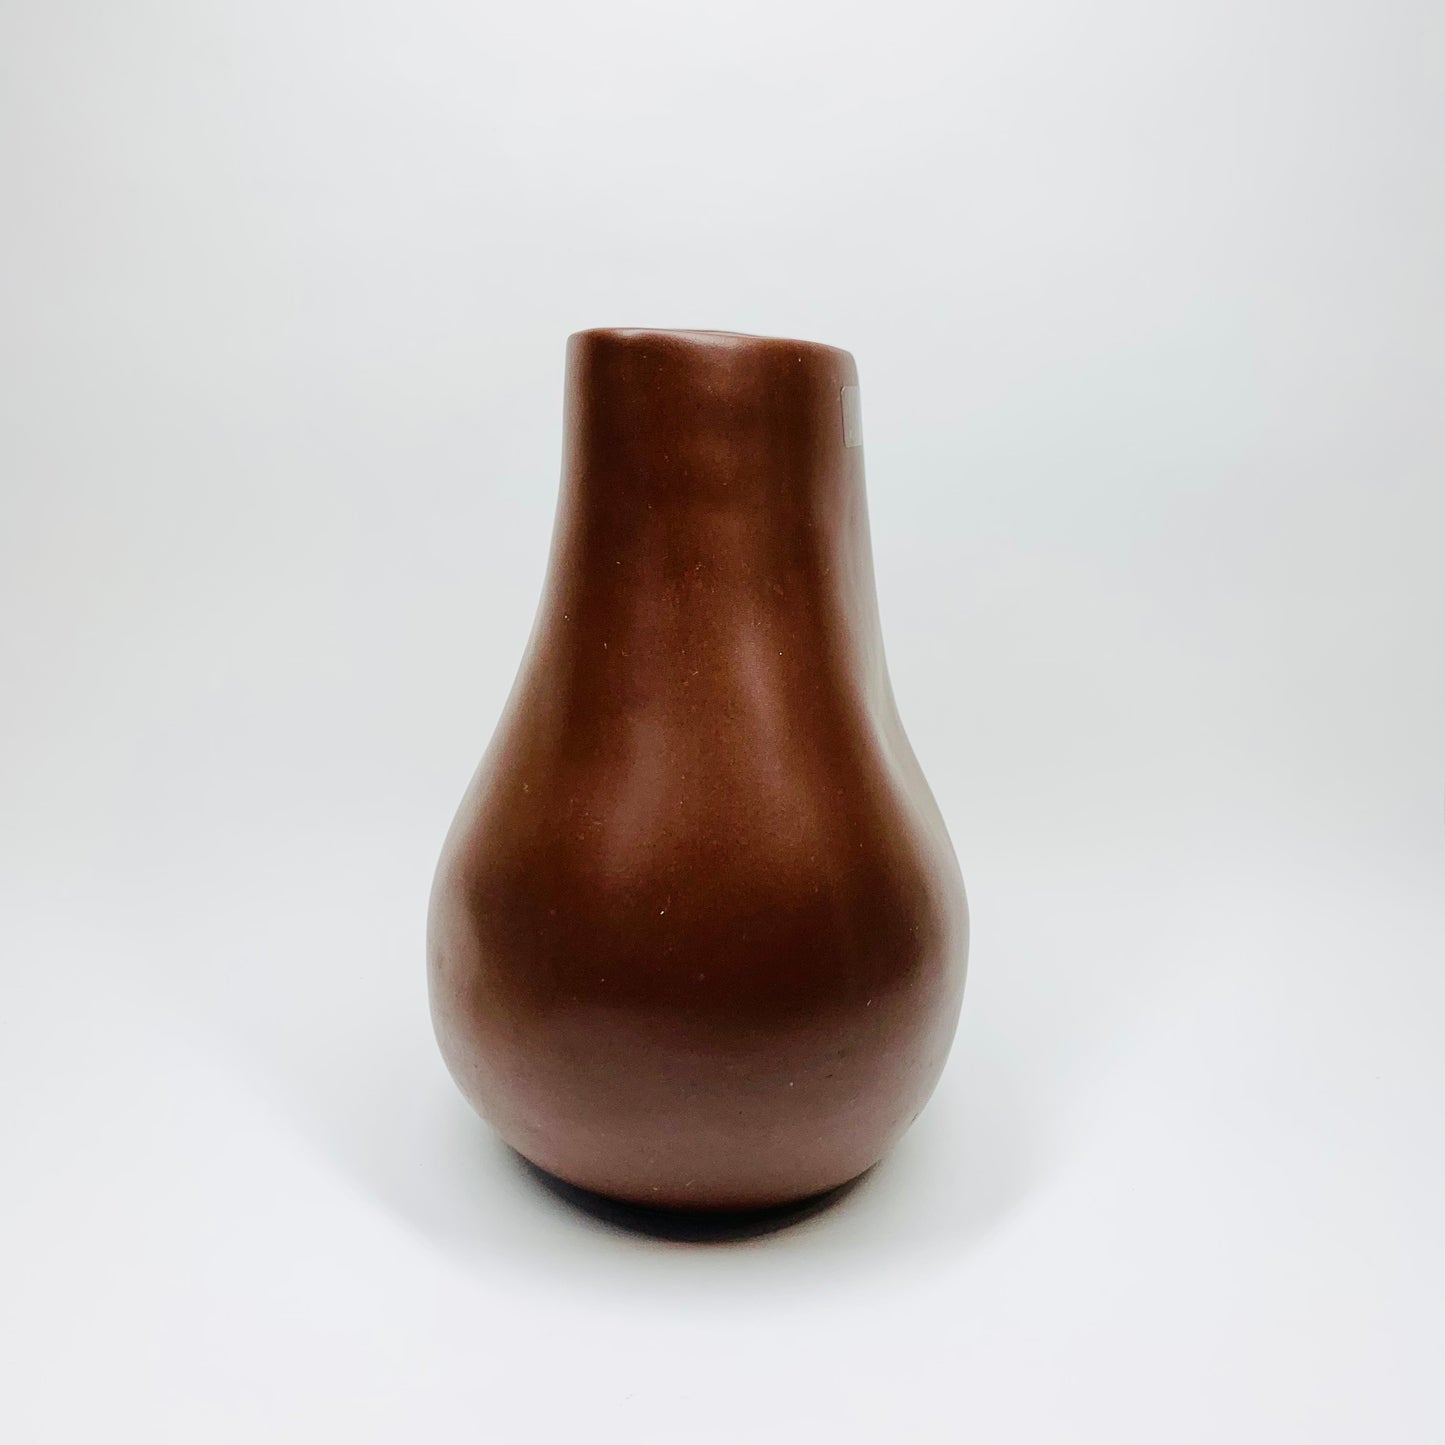 Rare 1980s ASA Germany brown pottery vase